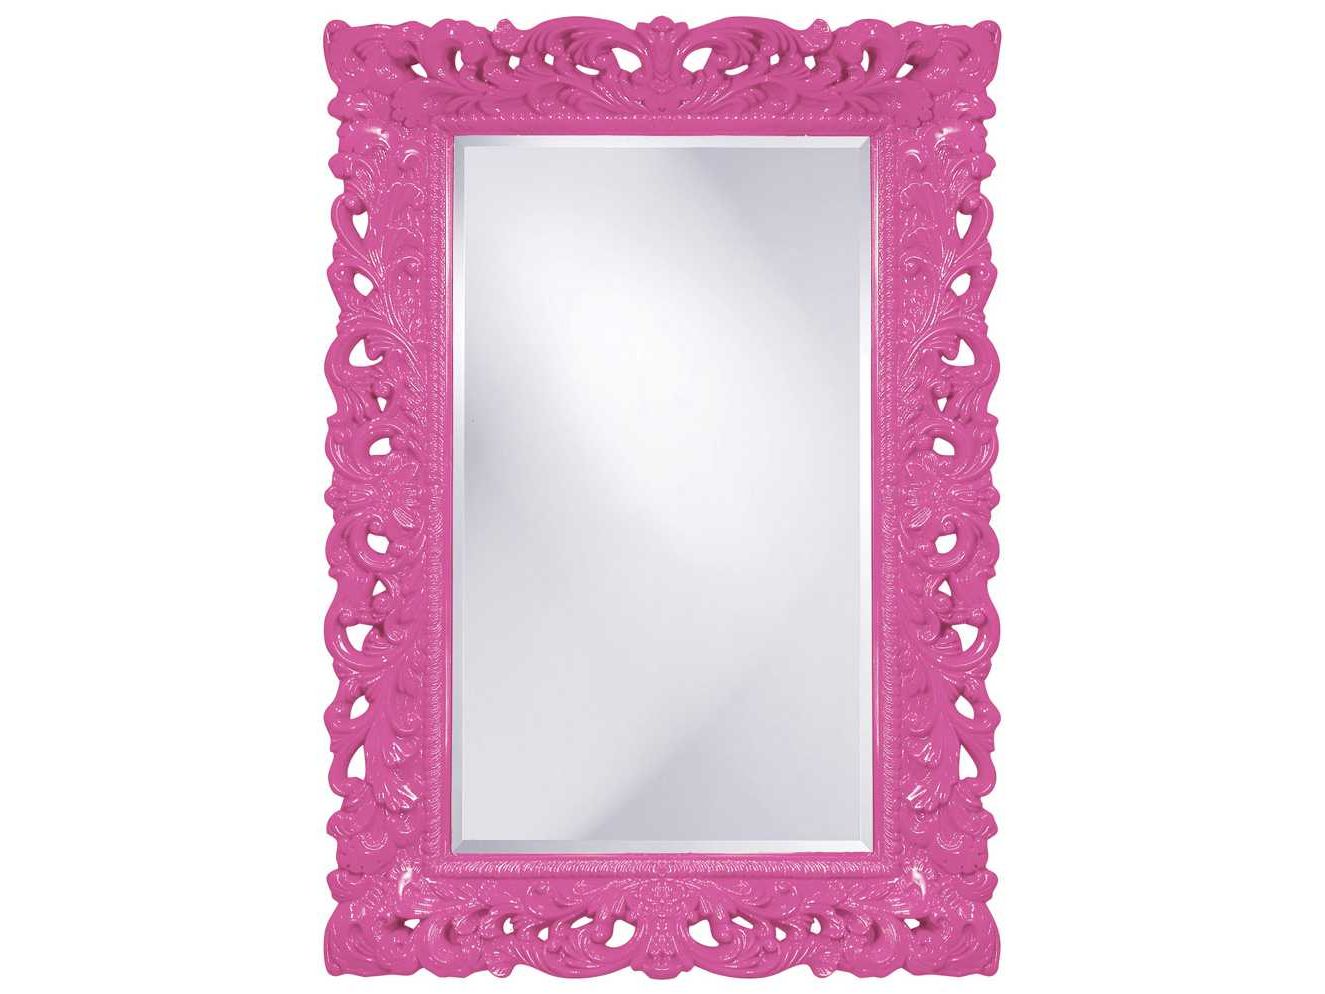 Popular Howard Elliott Barcelona 32 X 46 Hot Pink Wall Mirror Regarding Pink Wall Mirrors (View 8 of 20)